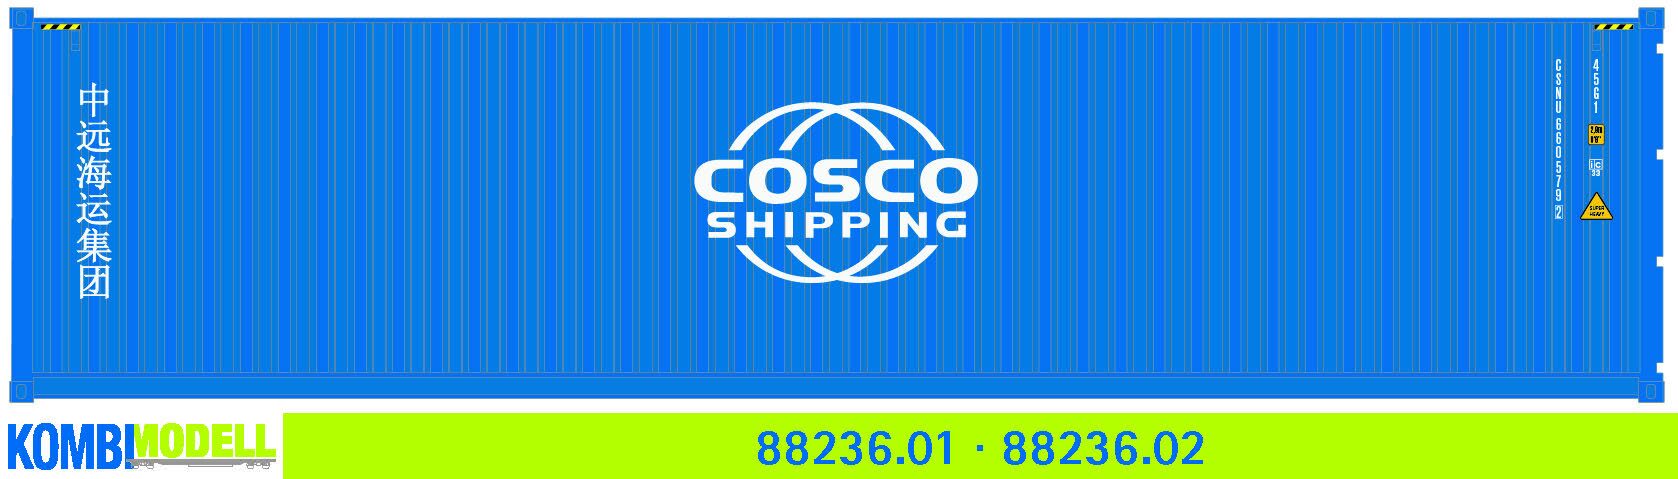 Kombimodell 88236.02 Ct 40' (45G1) »COSCO« Logo neu ═ SoSe 